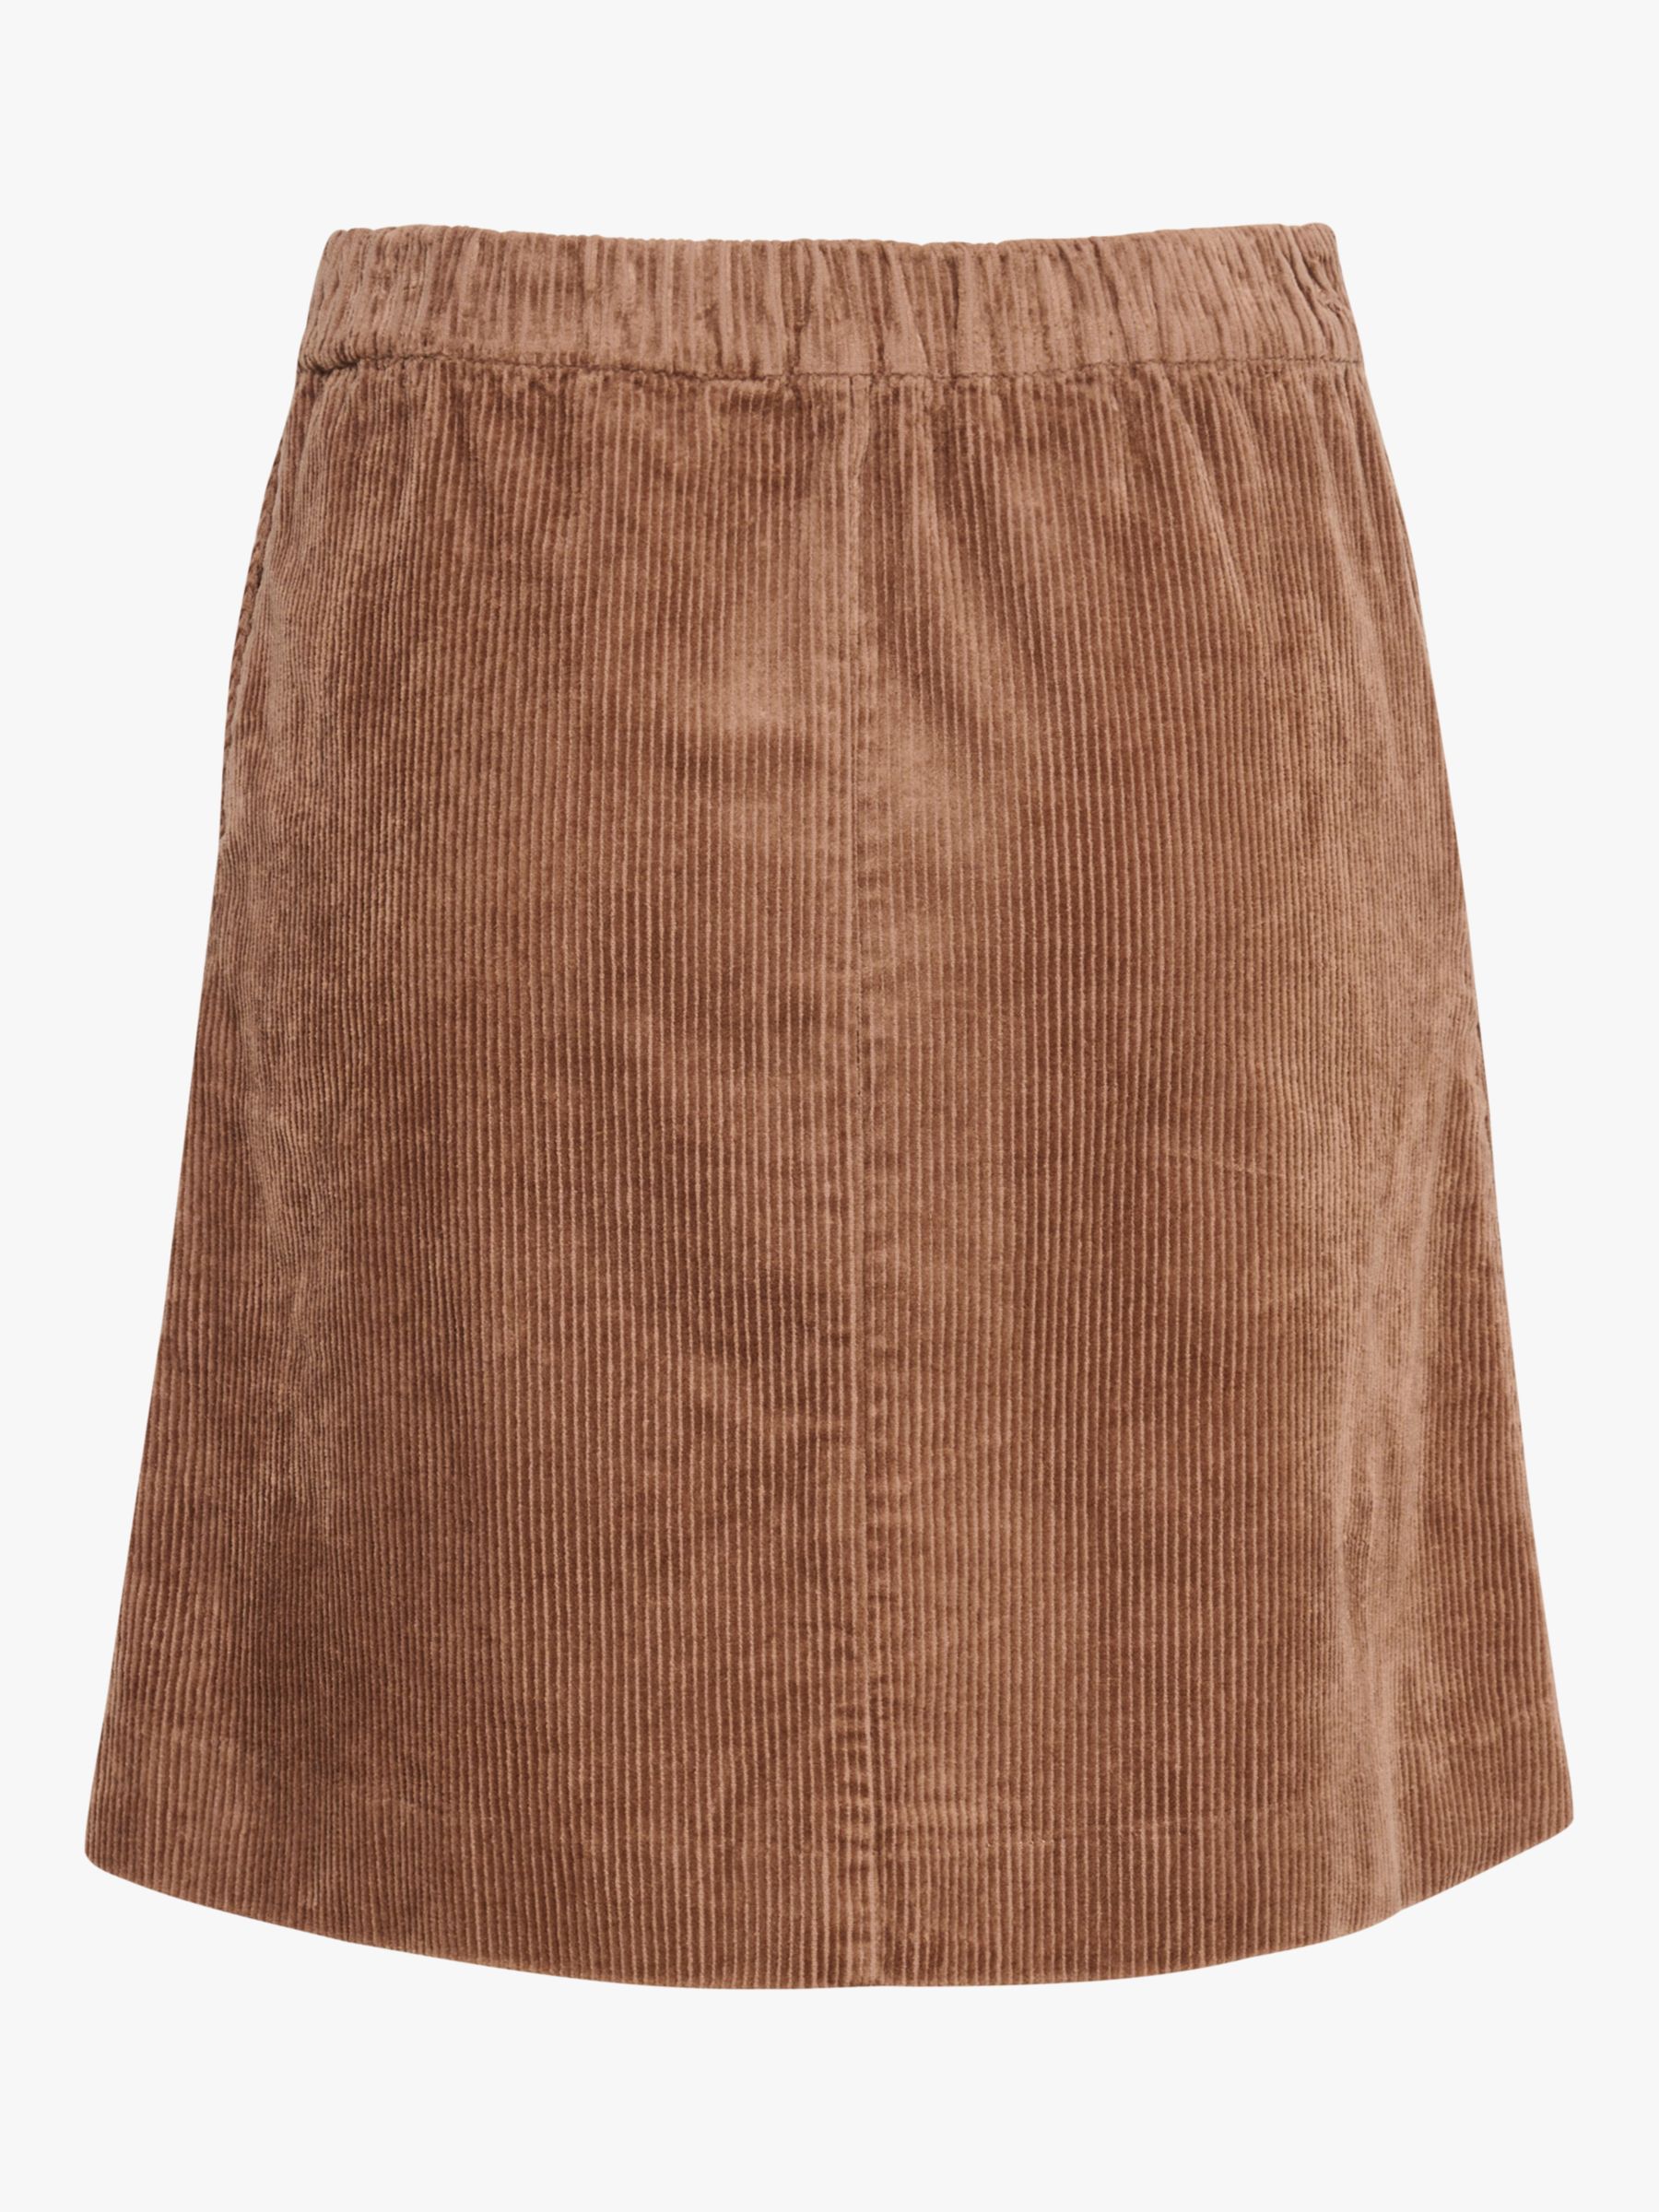 Part Two Lings Corduroy Mini Skirt, Amphora at John Lewis & Partners